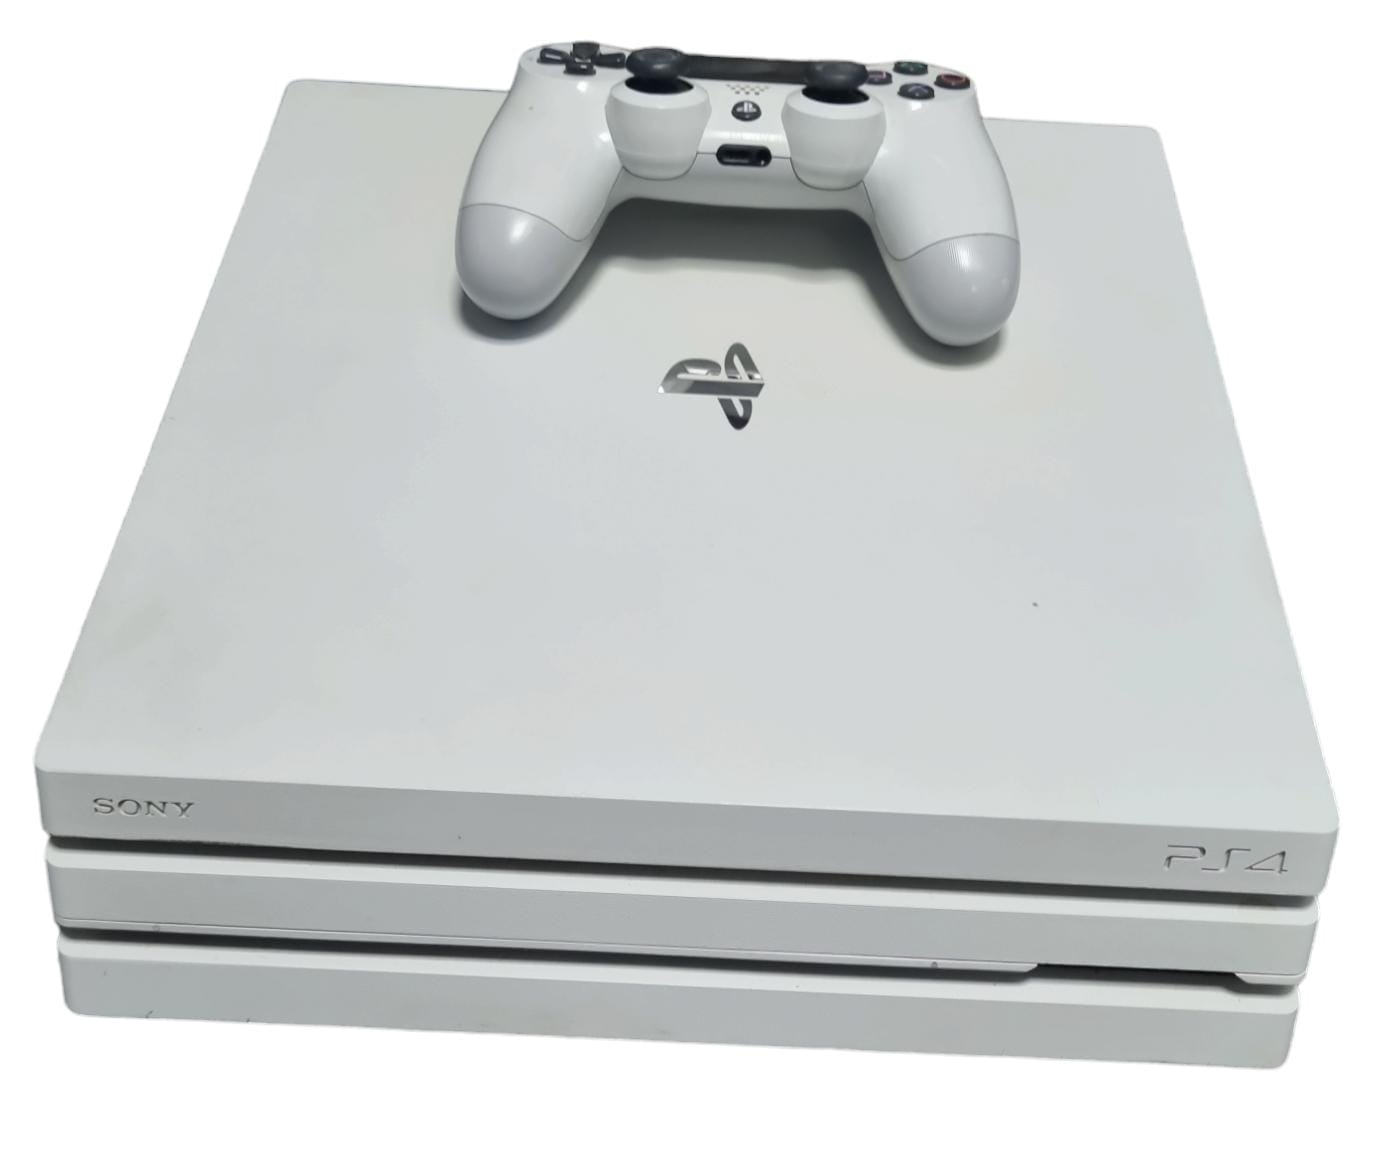 Sony Playstation 4 Pro Model - Glacier White - 1TB - 1 Official Pad - No Box